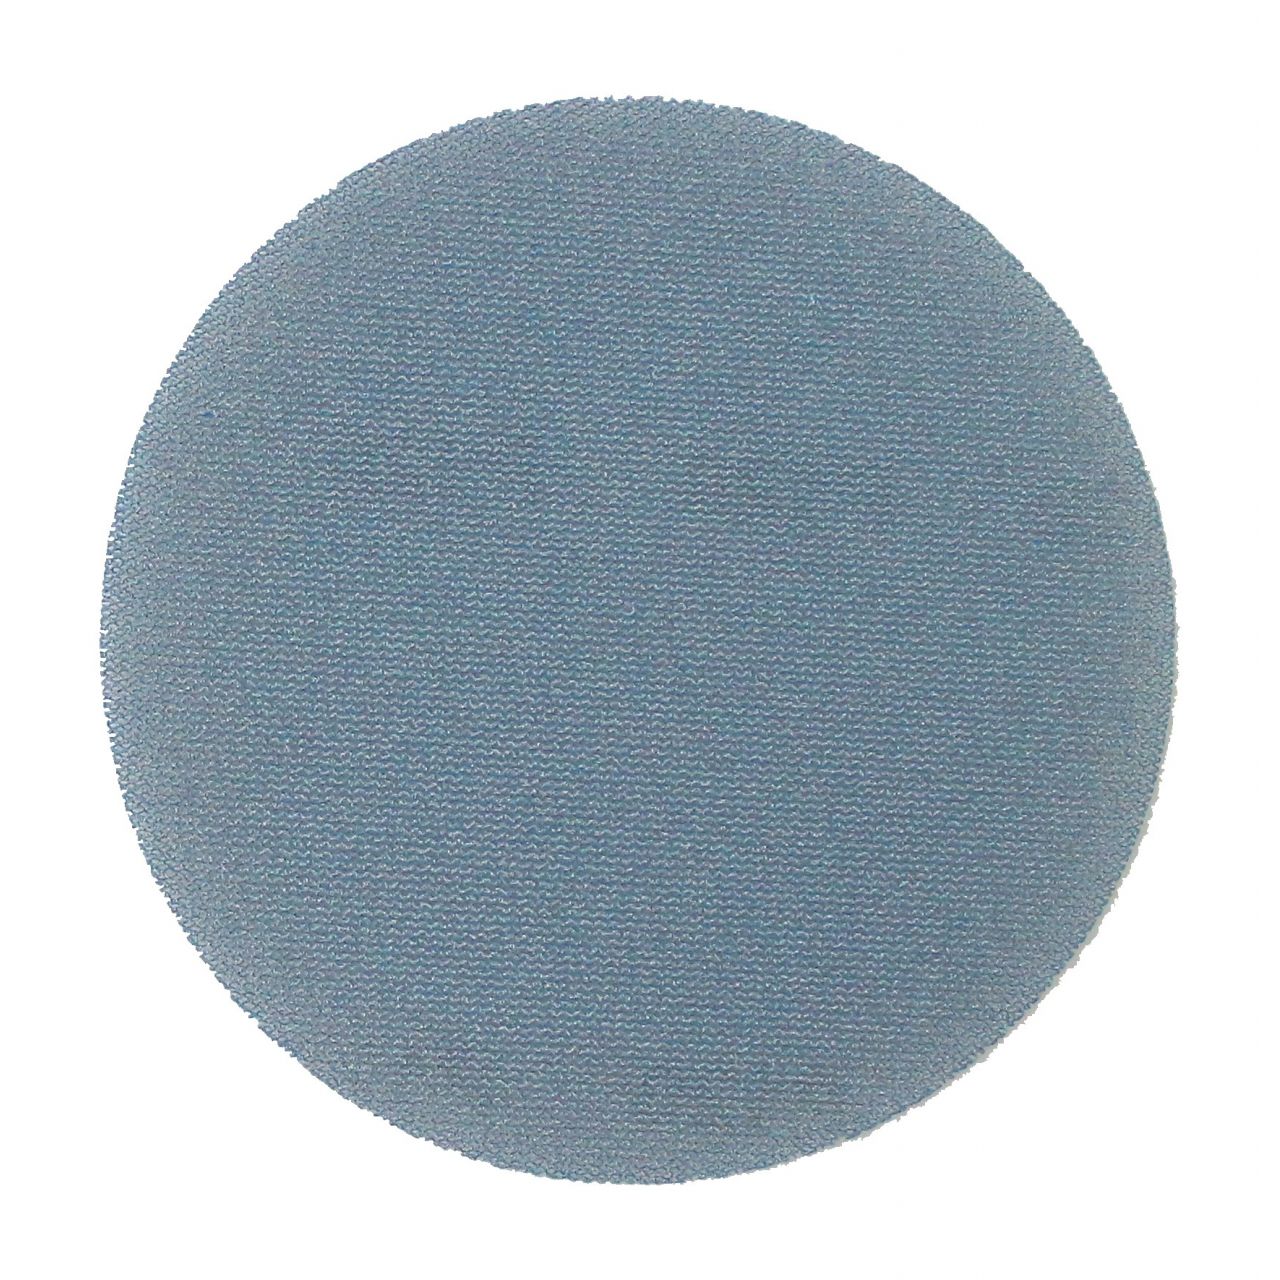 50 Discos de malla abrasiva autoadherente azul MAB (150/150)